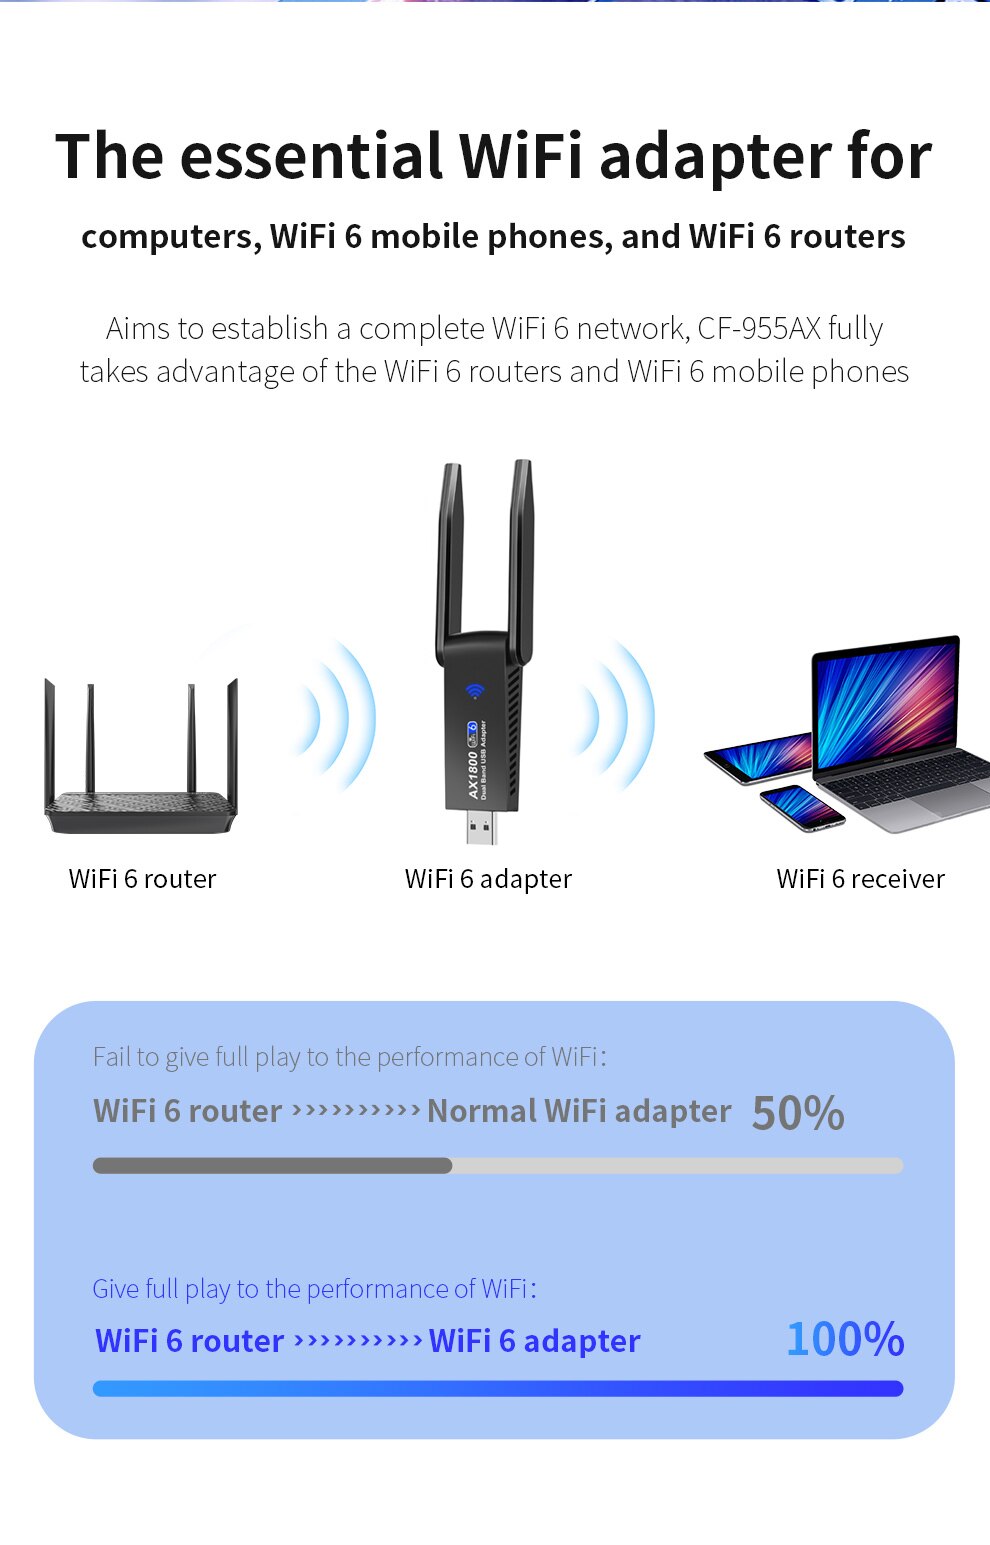 Wifi 6 Usb Adapter Dual Band AX1800 2.4G/5Ghz Draadloze Dongle Netwerkkaart RTL8832 Usb 3.0 WiFi6 adapter Voor Windows 7/10/11